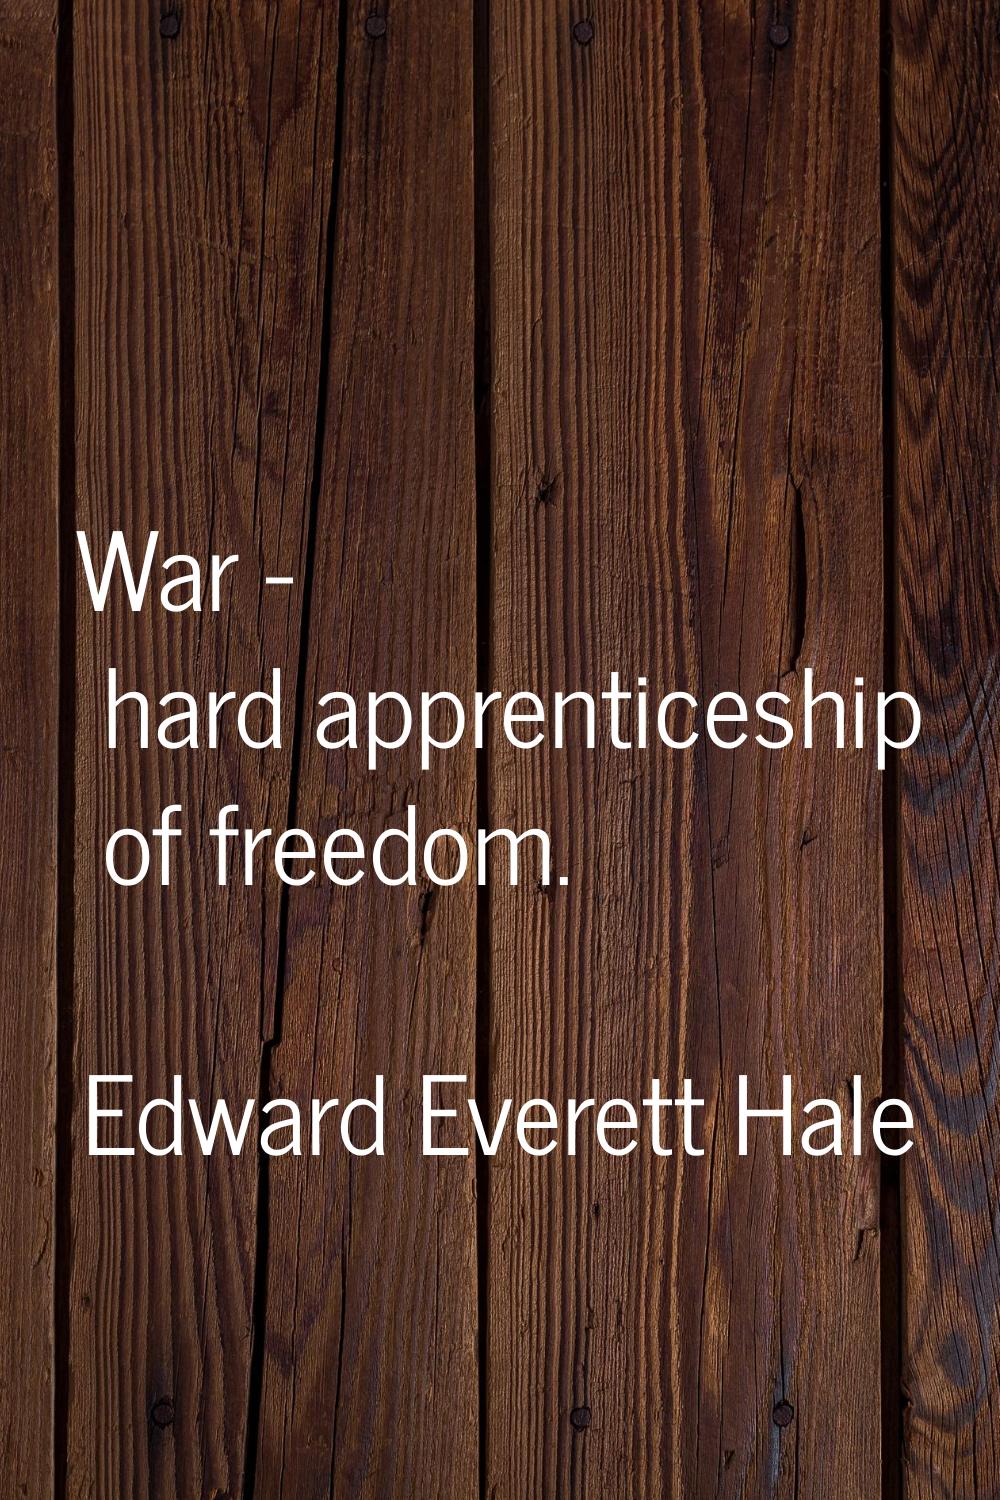 War - hard apprenticeship of freedom.